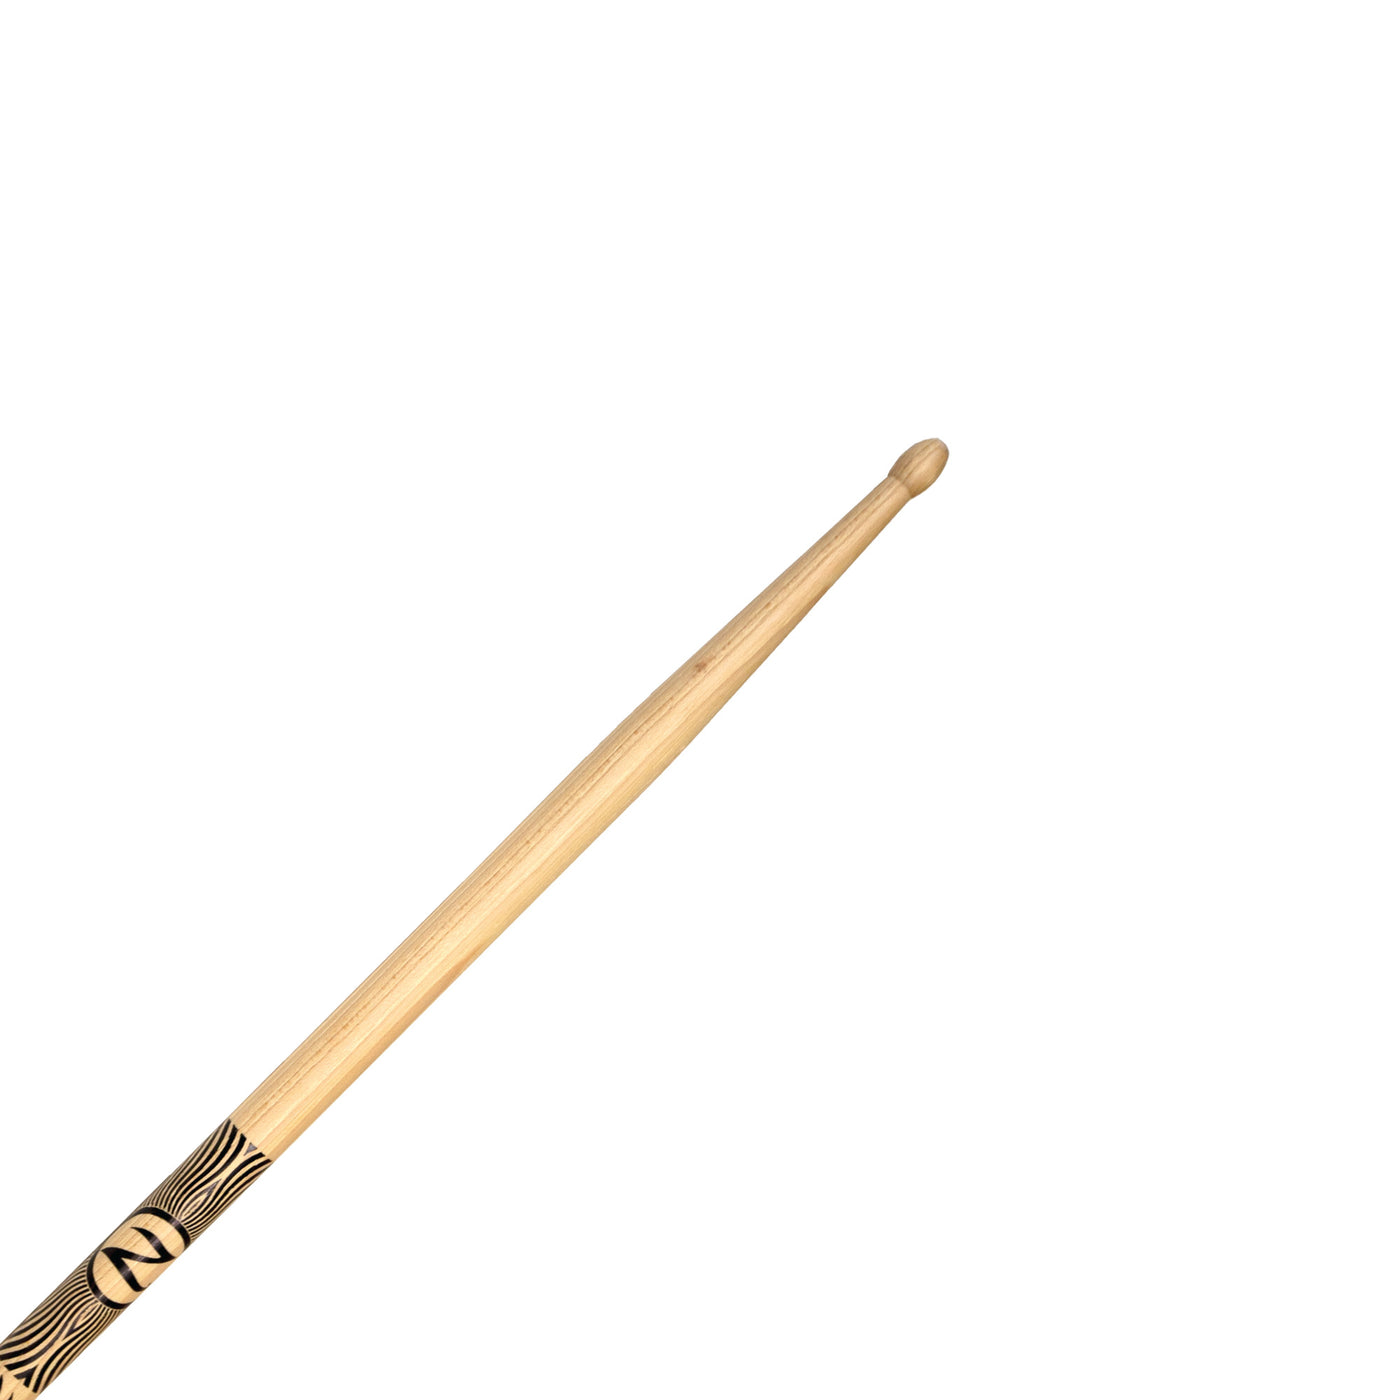 Zildjian Limited Edition 400th Anniversary 5A Drumstick (Z5A-400)